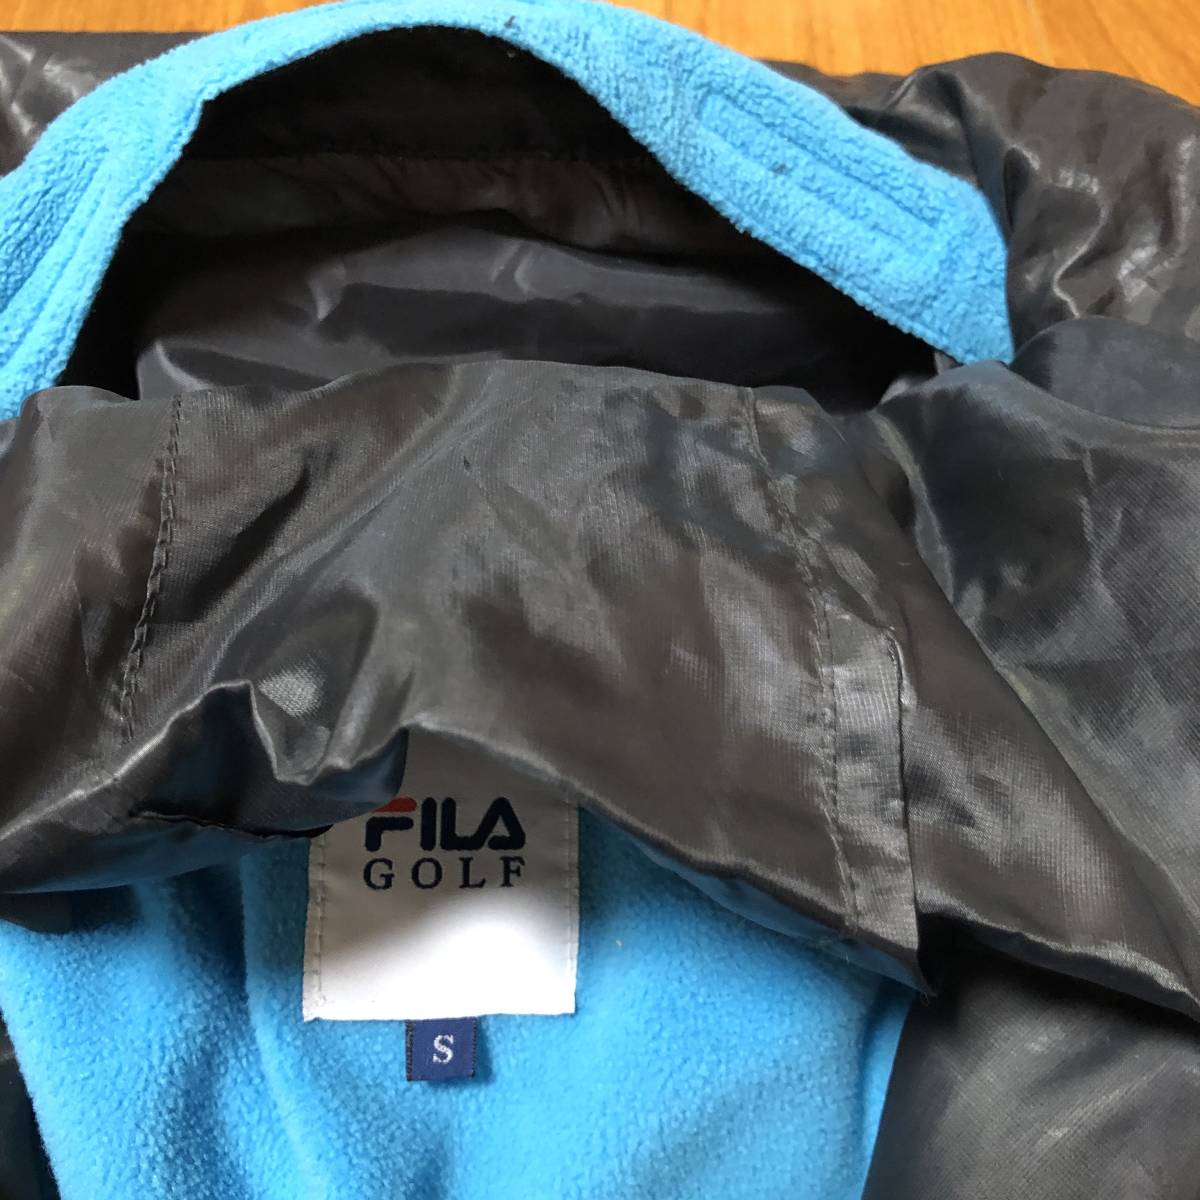 [FILA GOLF] filler Golf Golf wear down jacket long lady's S size moss green free shipping!